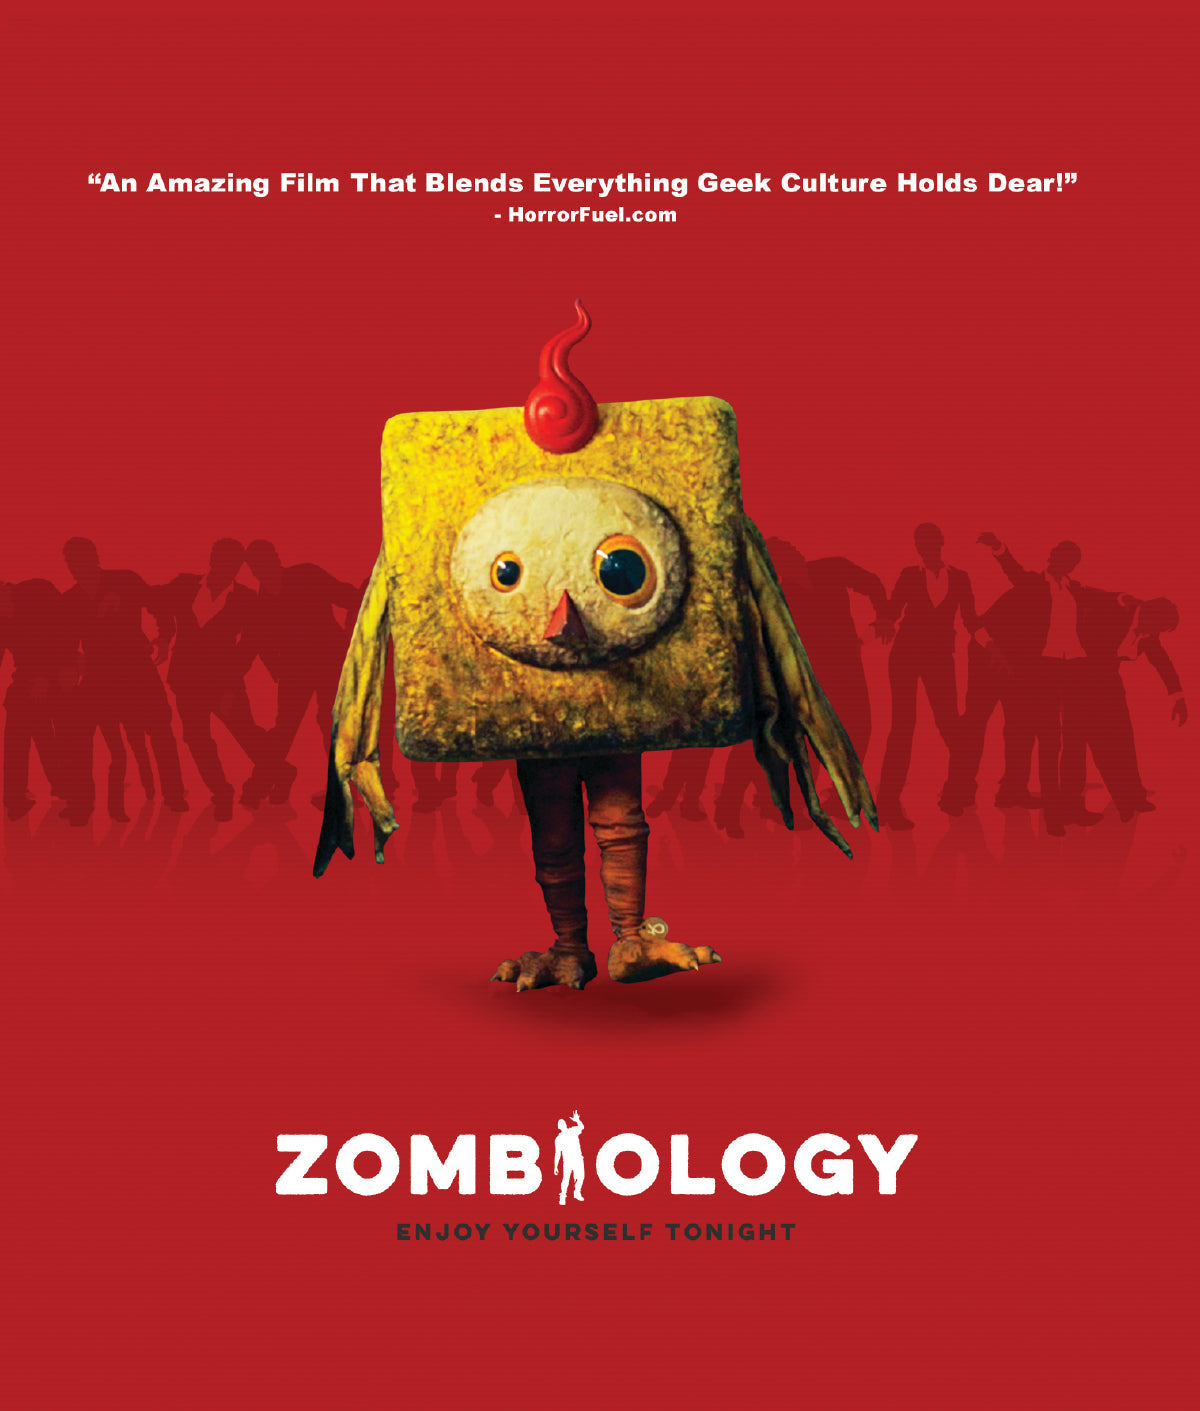 Zombiology / Vidar The Vampire Blu-Ray Blu-Ray